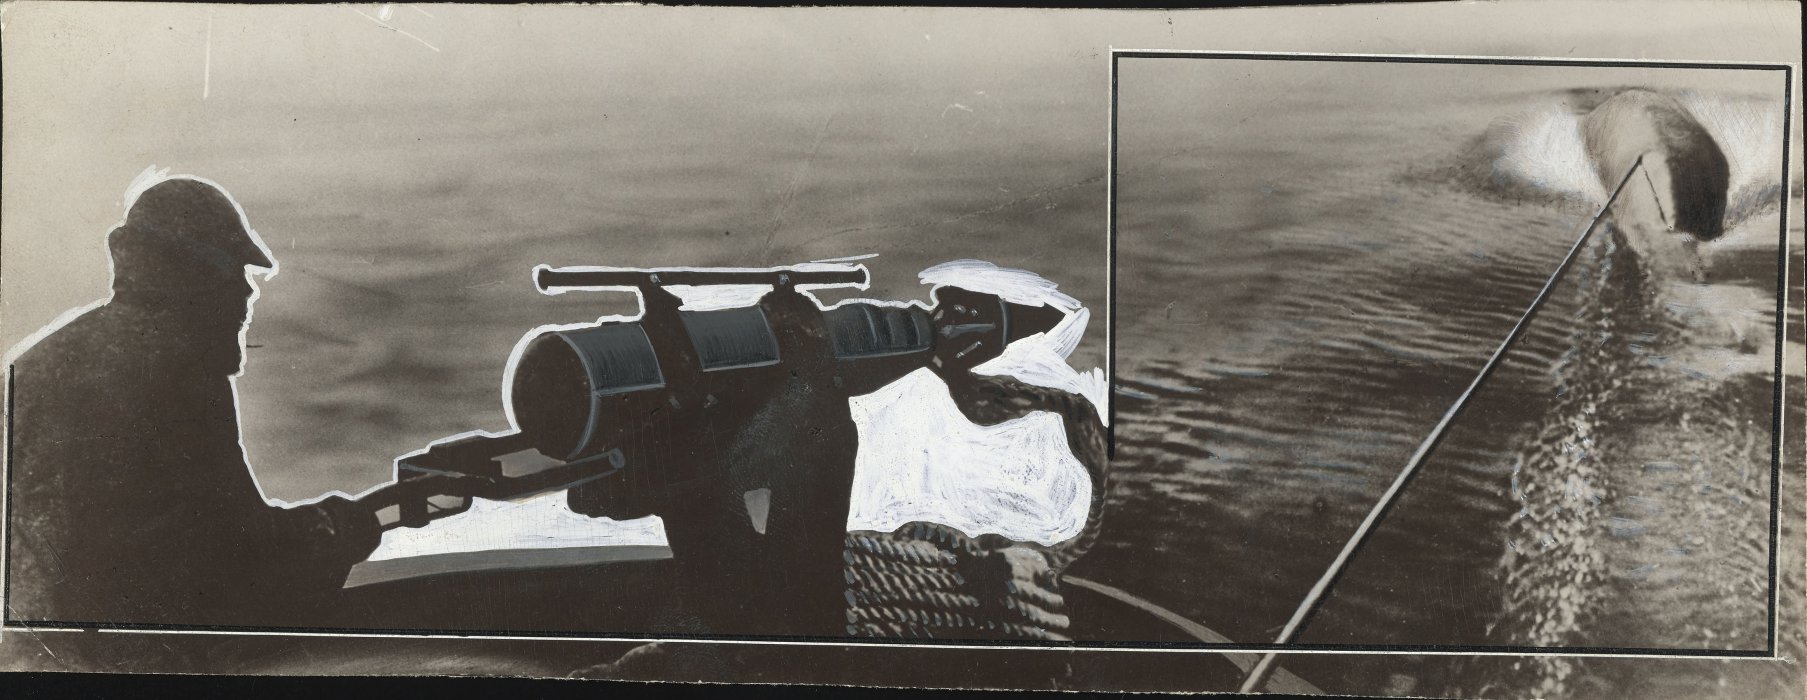 Man operating harpoon gun on board ship